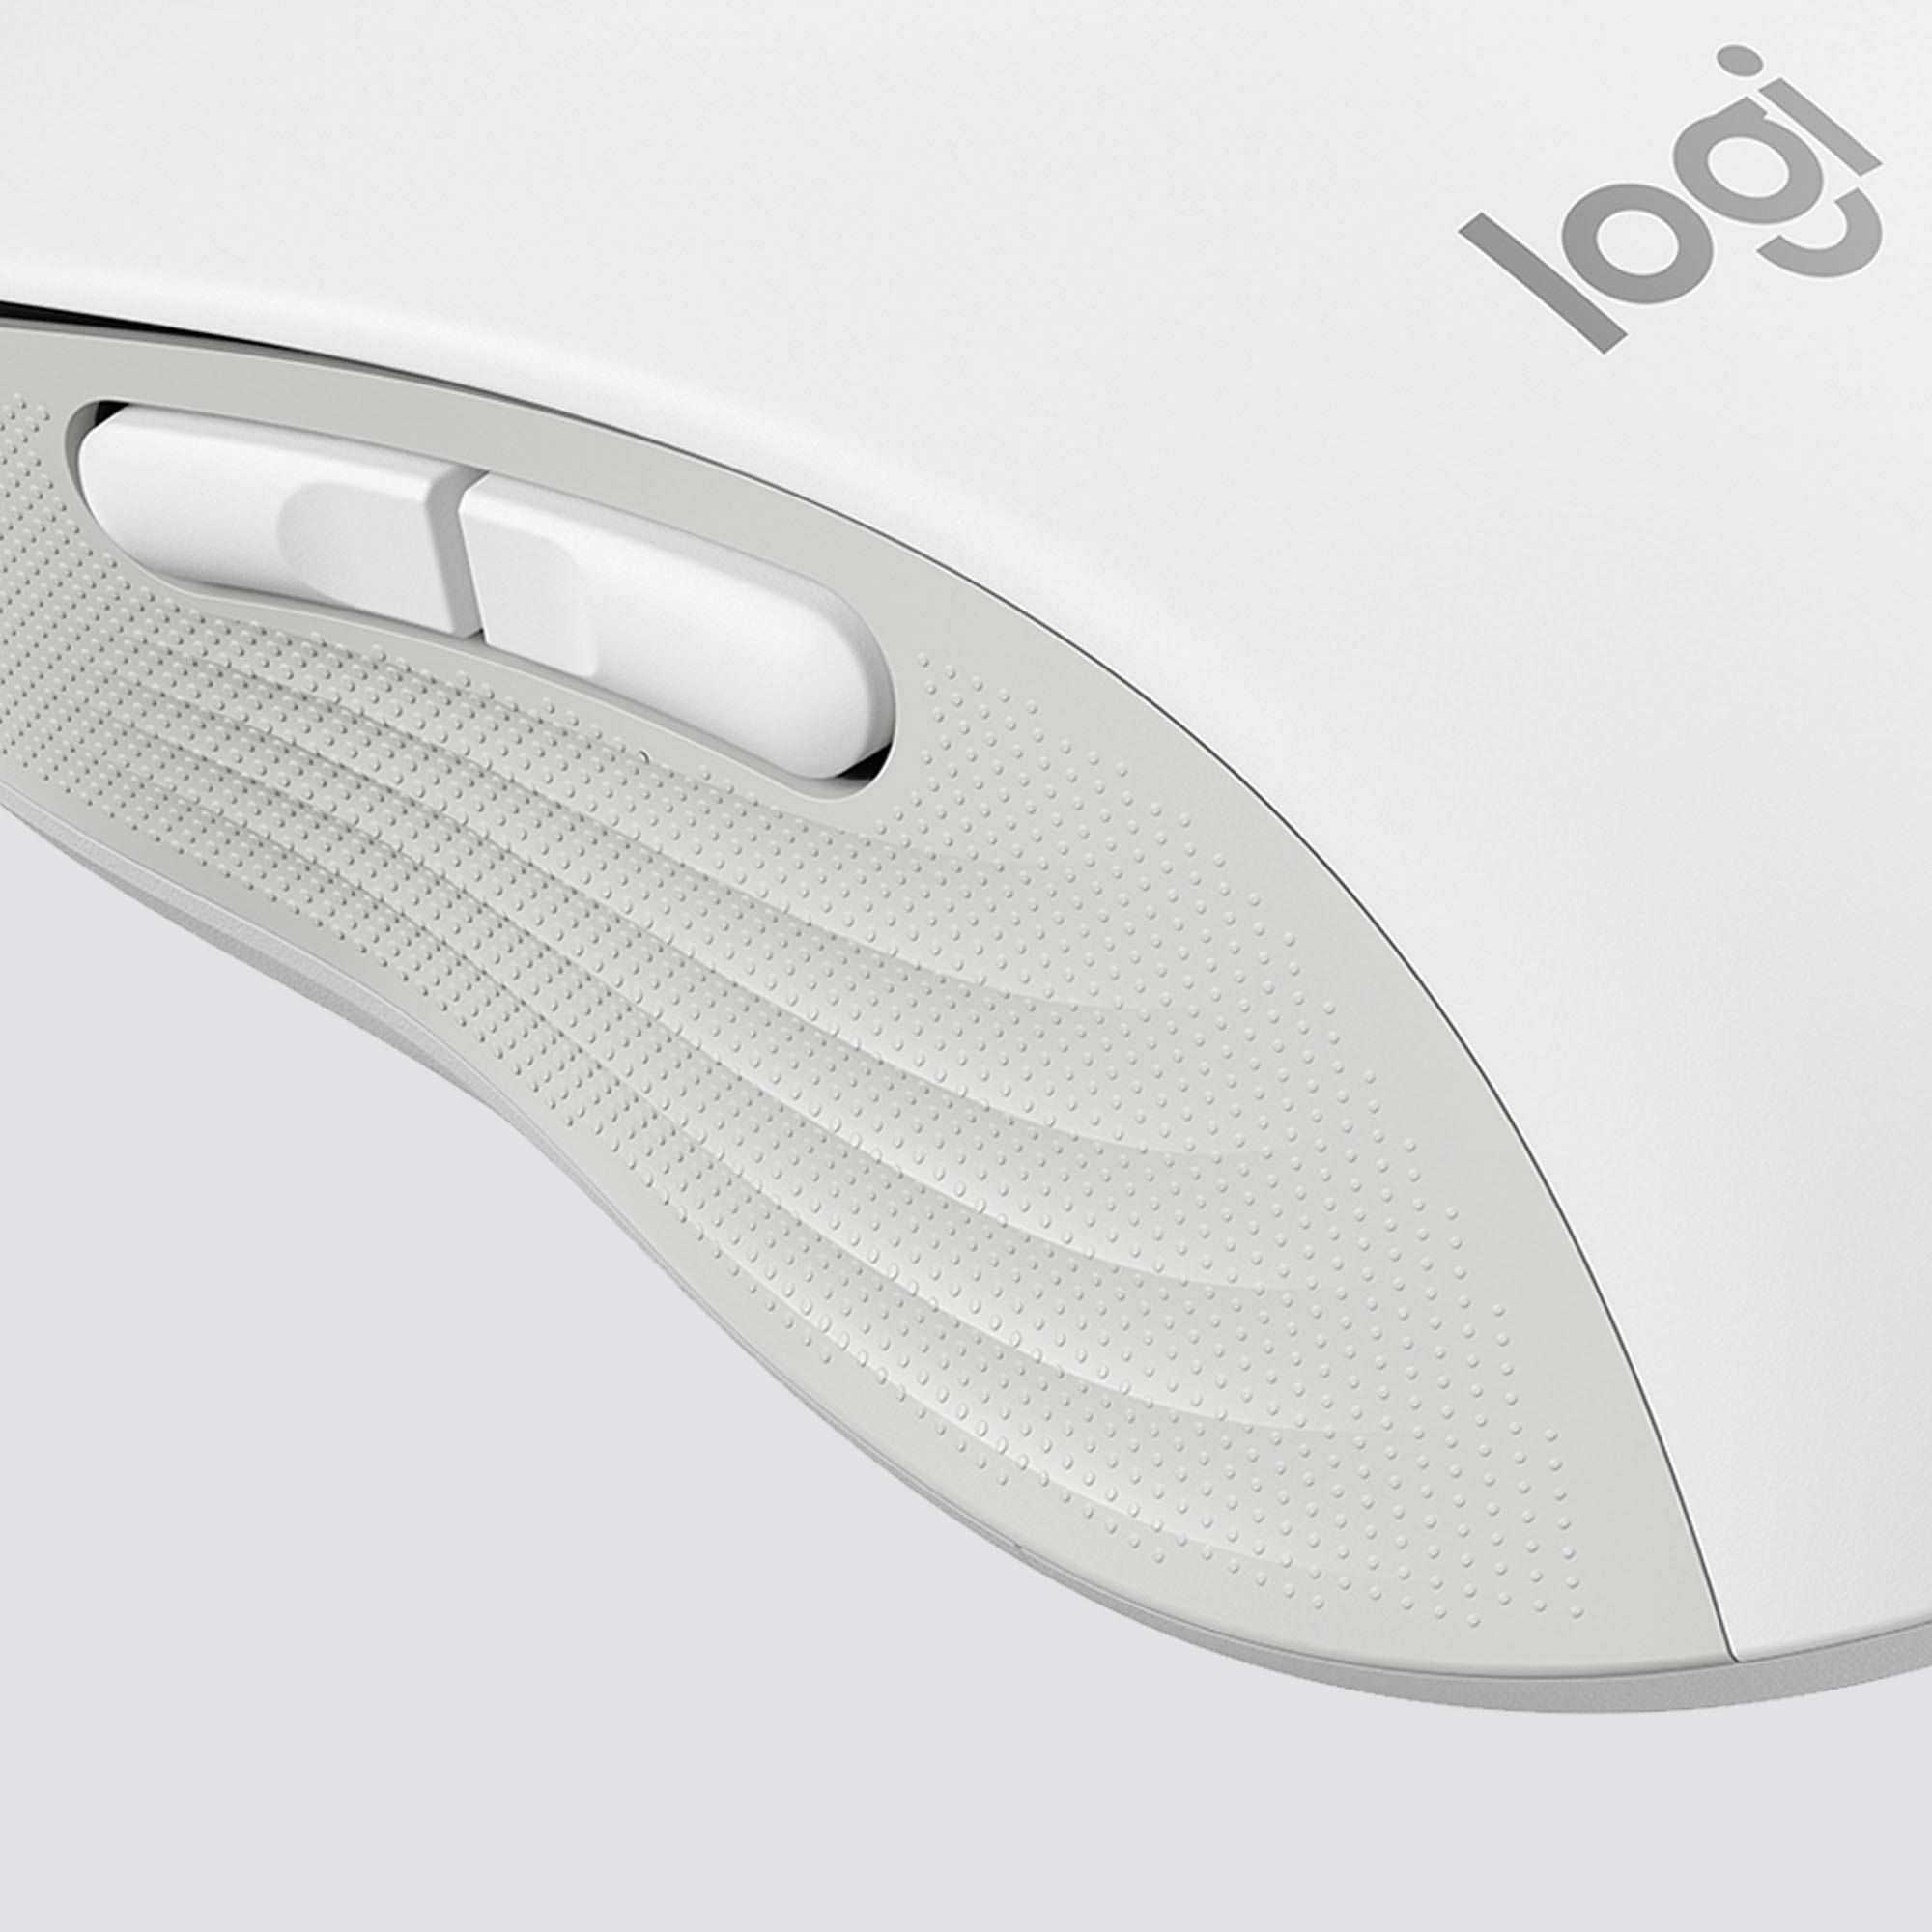 Logitech Signature M650 Series computer mice feature SmartWheel scrolling  for precision » Gadget Flow